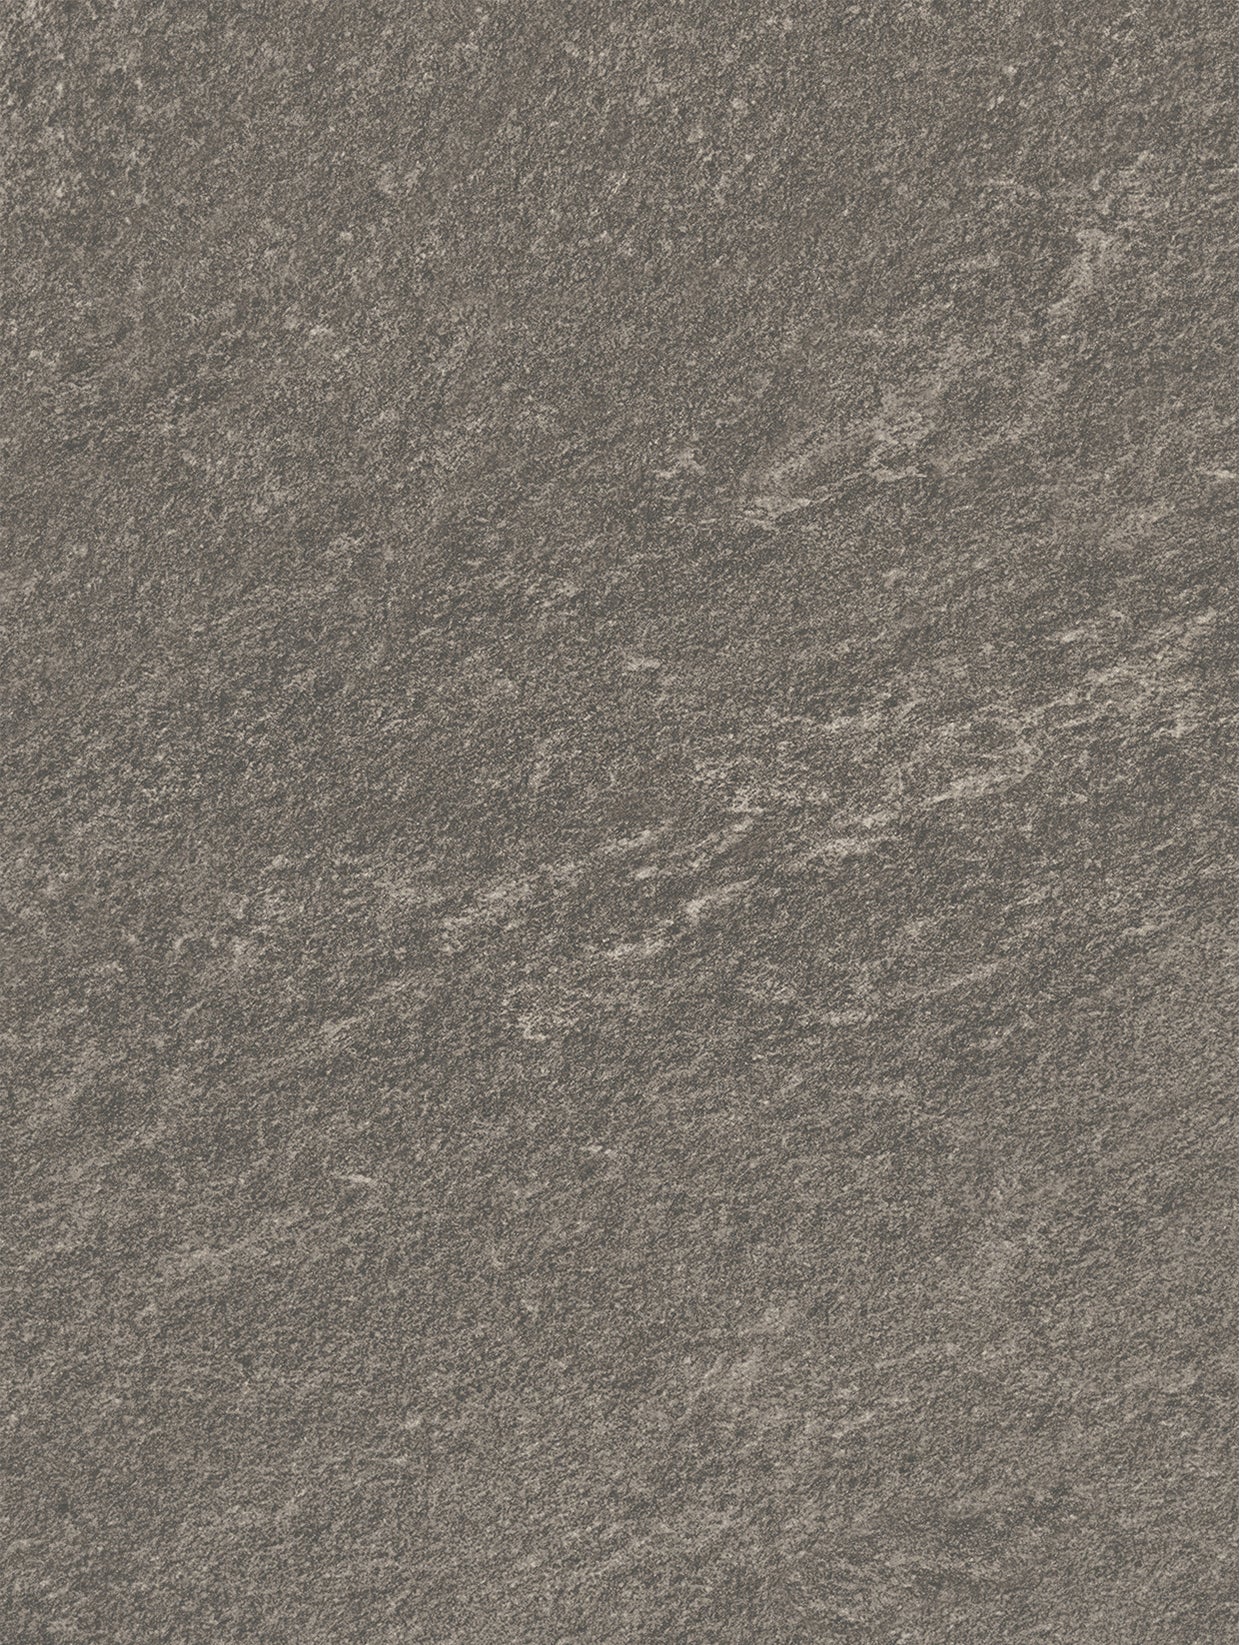 Steen - Graniet | Natuursteen decor graniet structuur monsterfilm A3